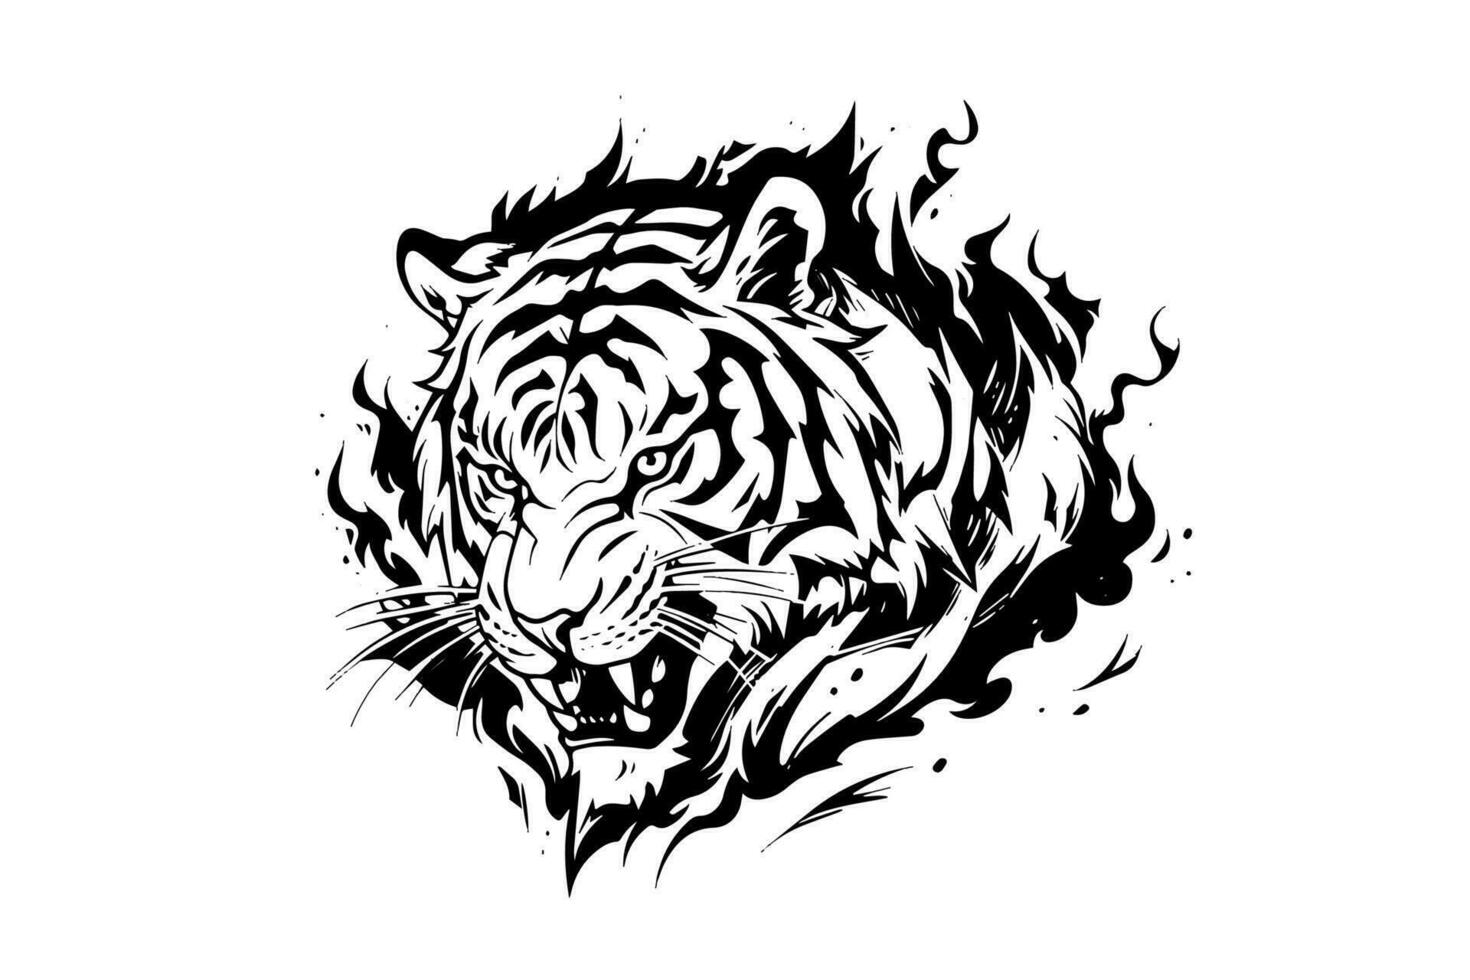 Tigre mascota deporte o tatuaje diseño. negro y blanco vector ilustración logotipo firmar Arte.